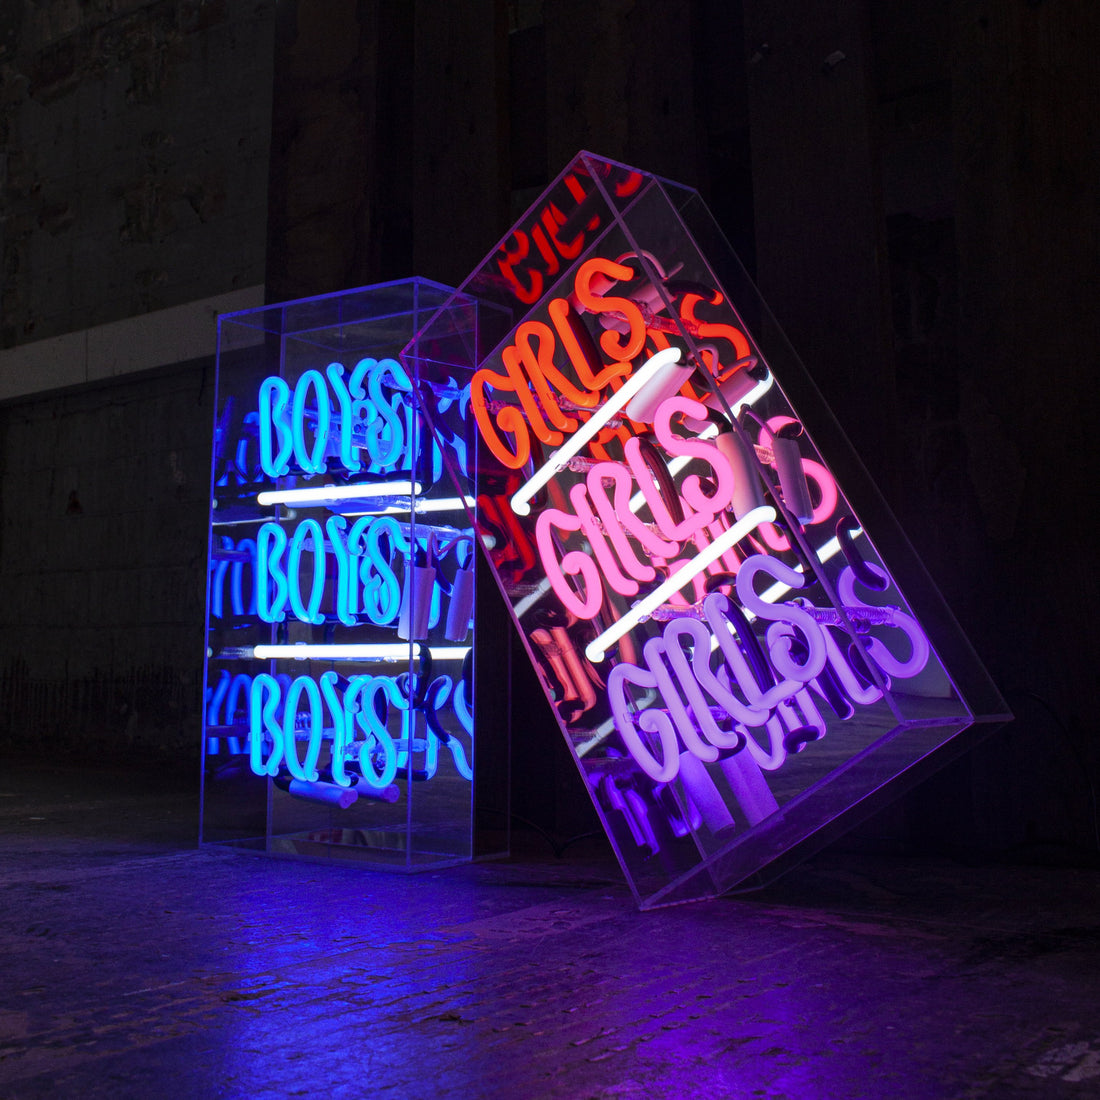 'Boys Boys Boys' Acrylic Box Neon Light - Locomocean